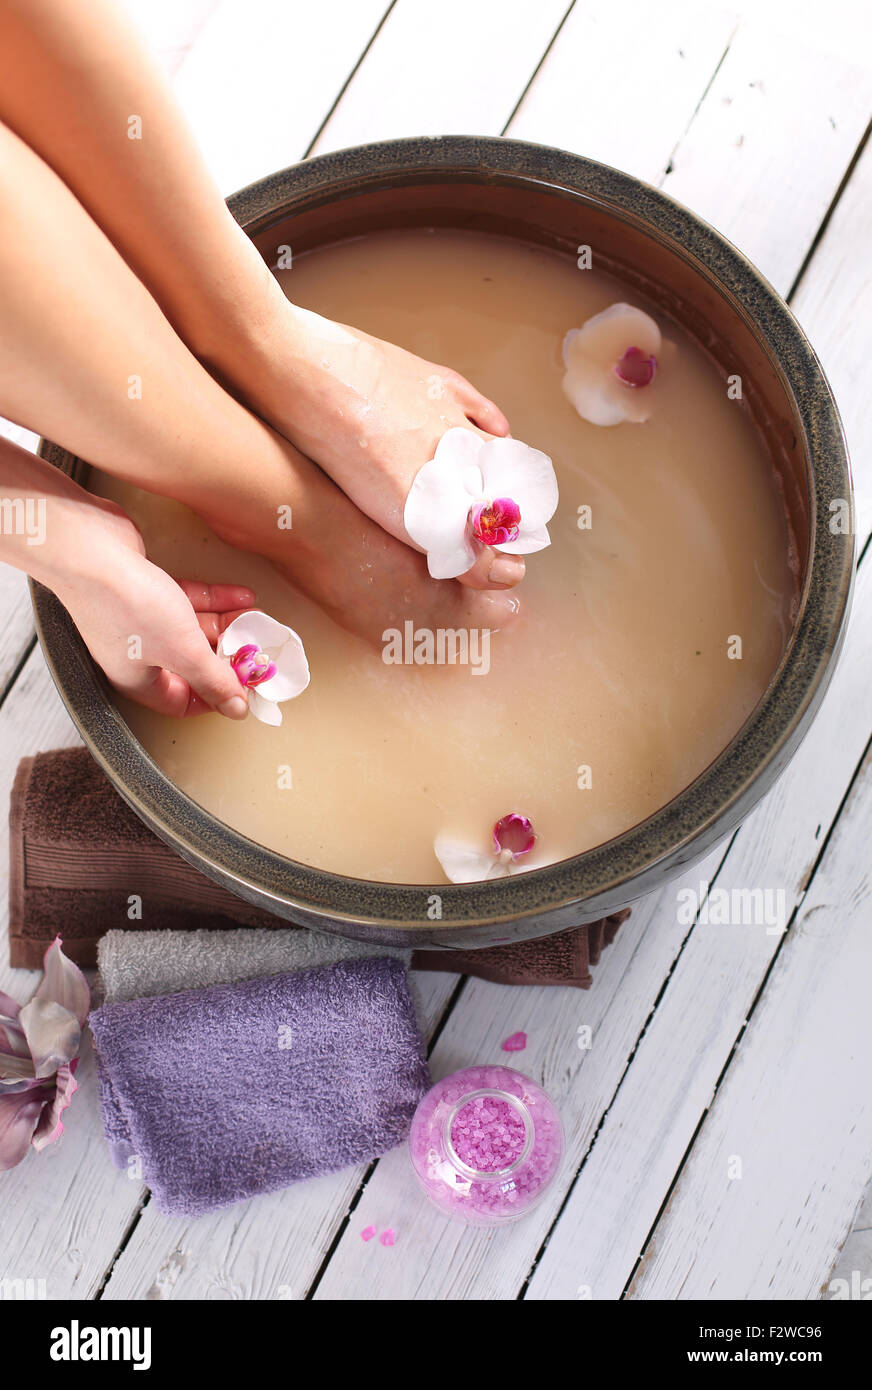 https://c8.alamy.com/comp/F2WC96/washing-of-feet-home-foot-care-bath-for-feet-relaxing-foot-bathfoot-F2WC96.jpg